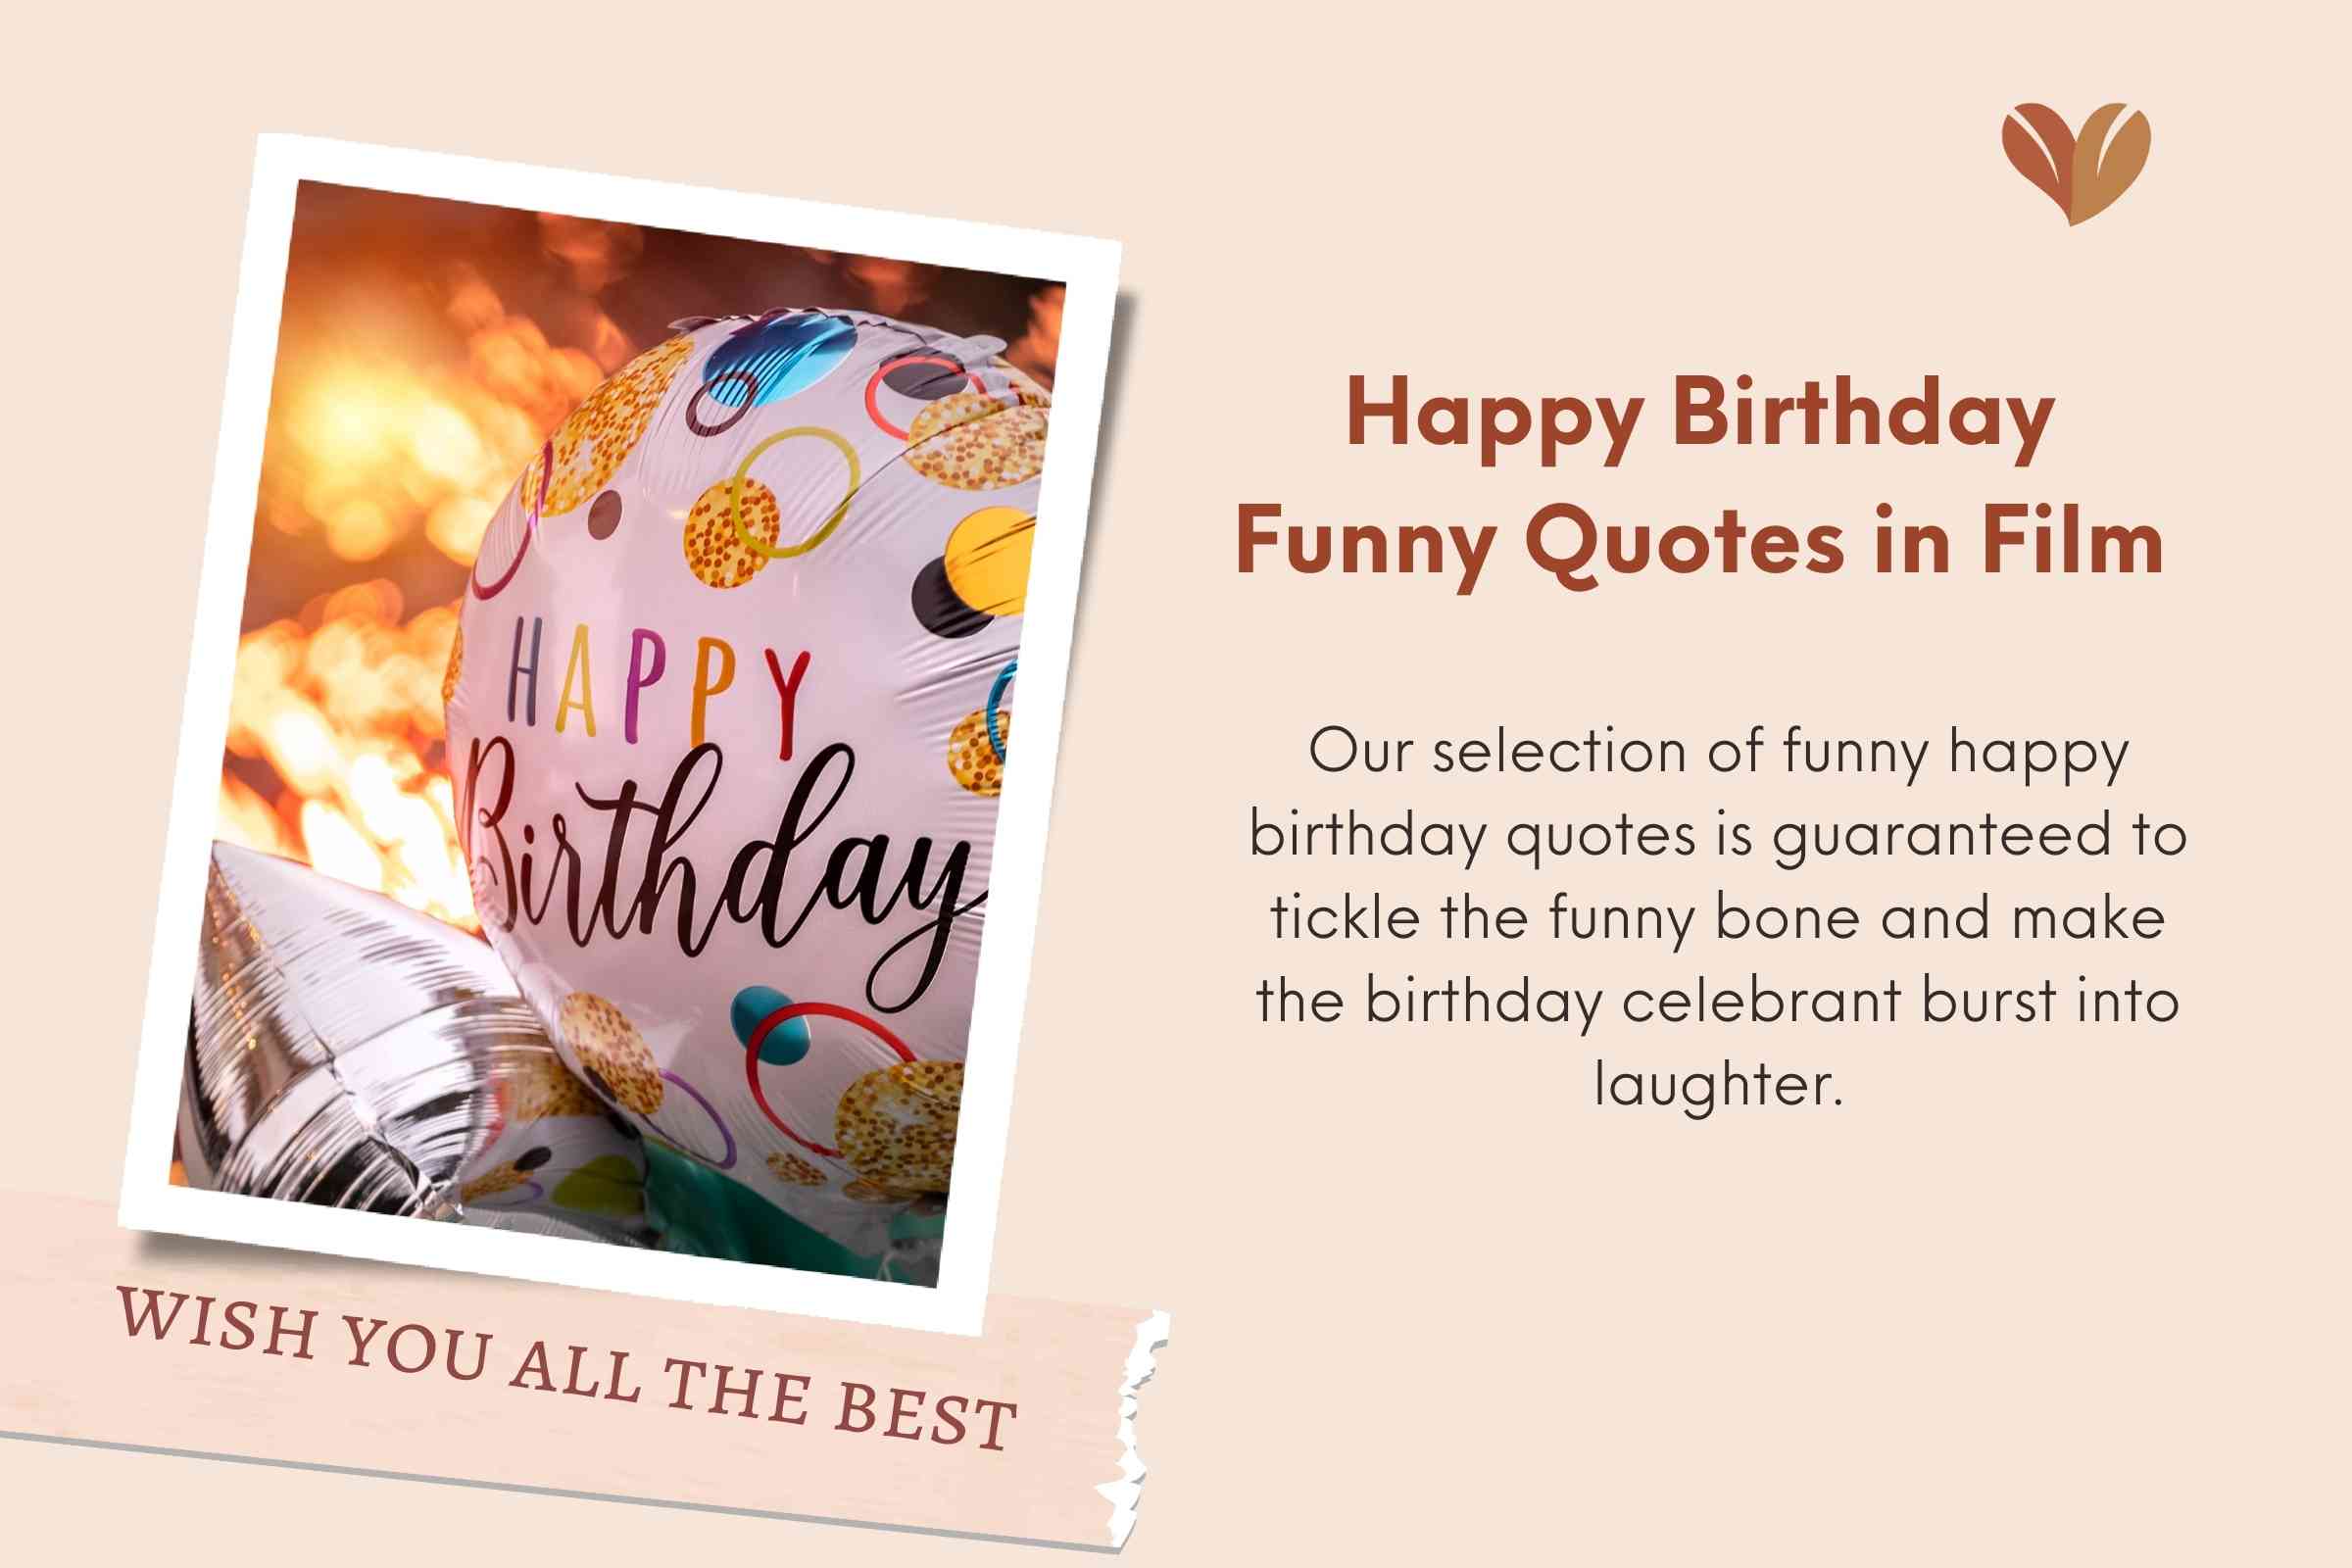 Happy Birthday Funny Quotes in Film